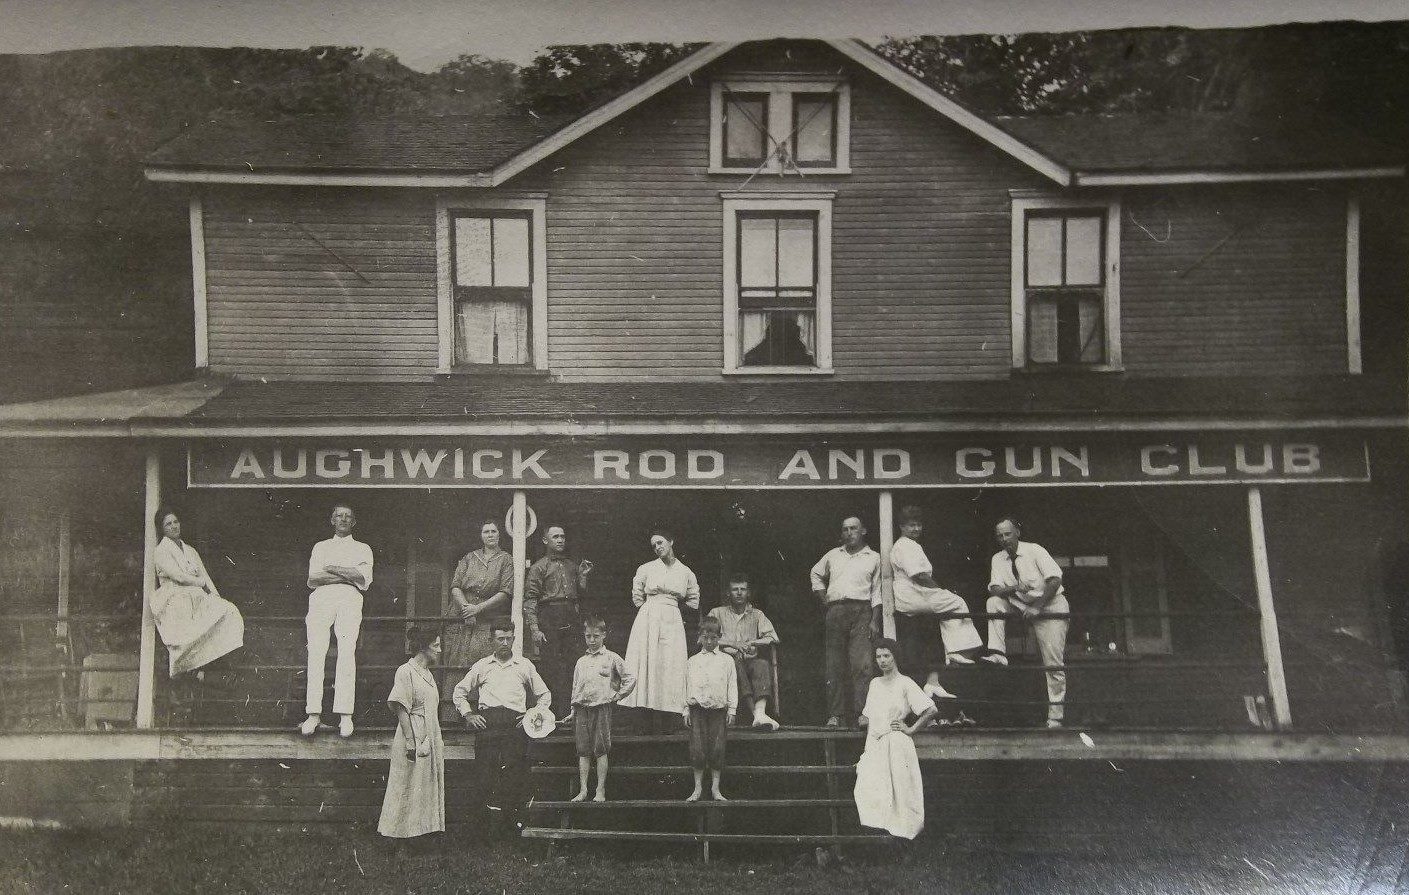 Aughwick Rod and Gun Club